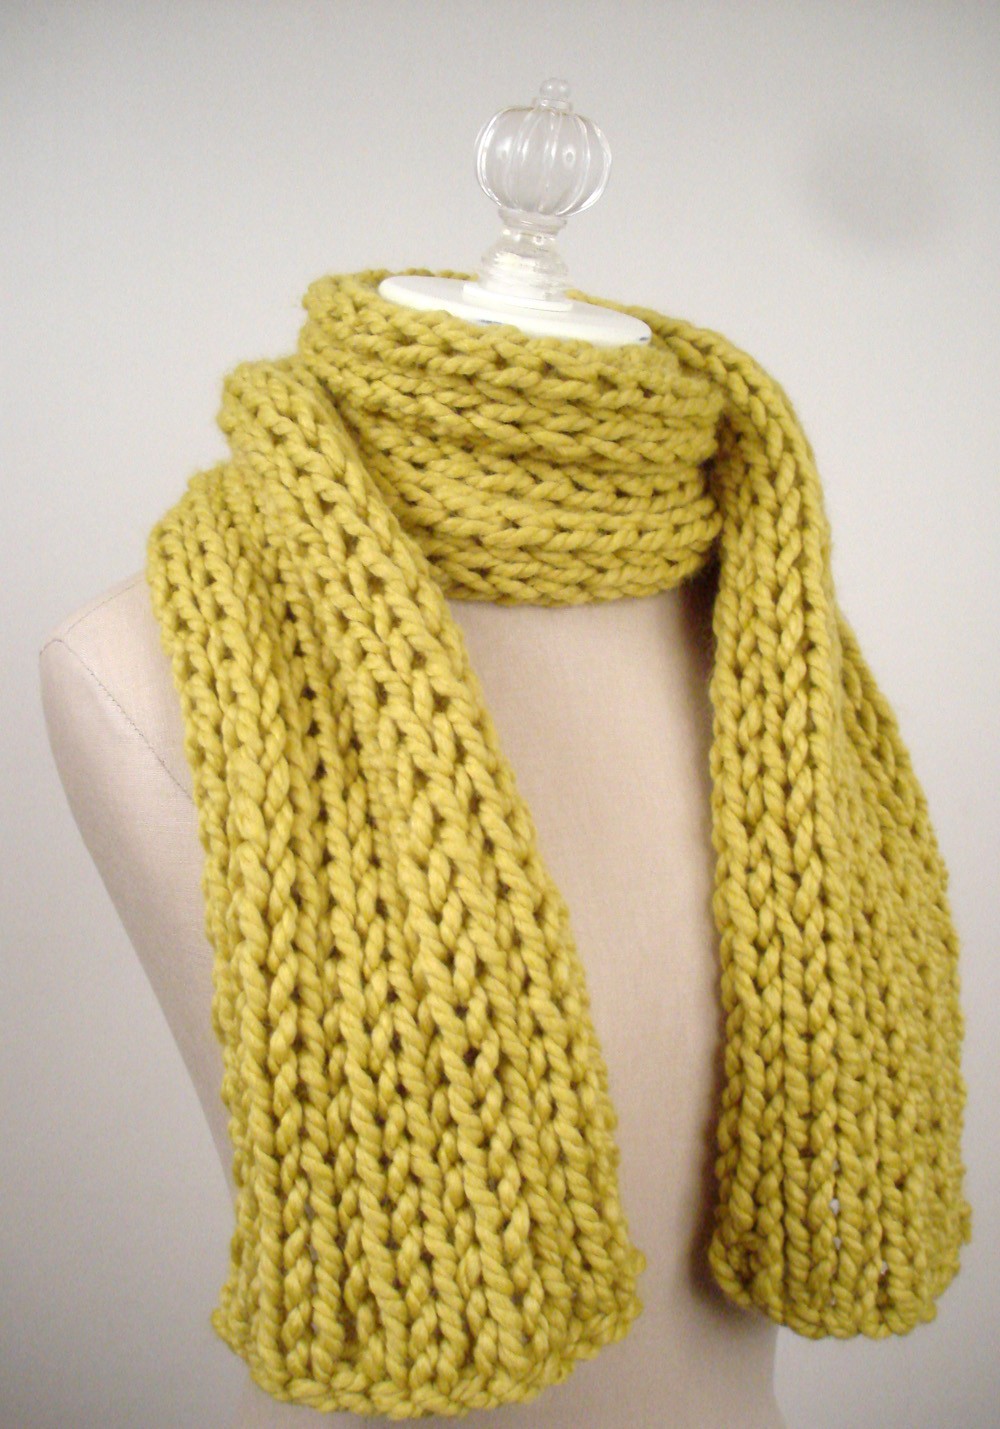 knitting patterns for scarves scarf knitting patterns a knitting blog gecrvvg